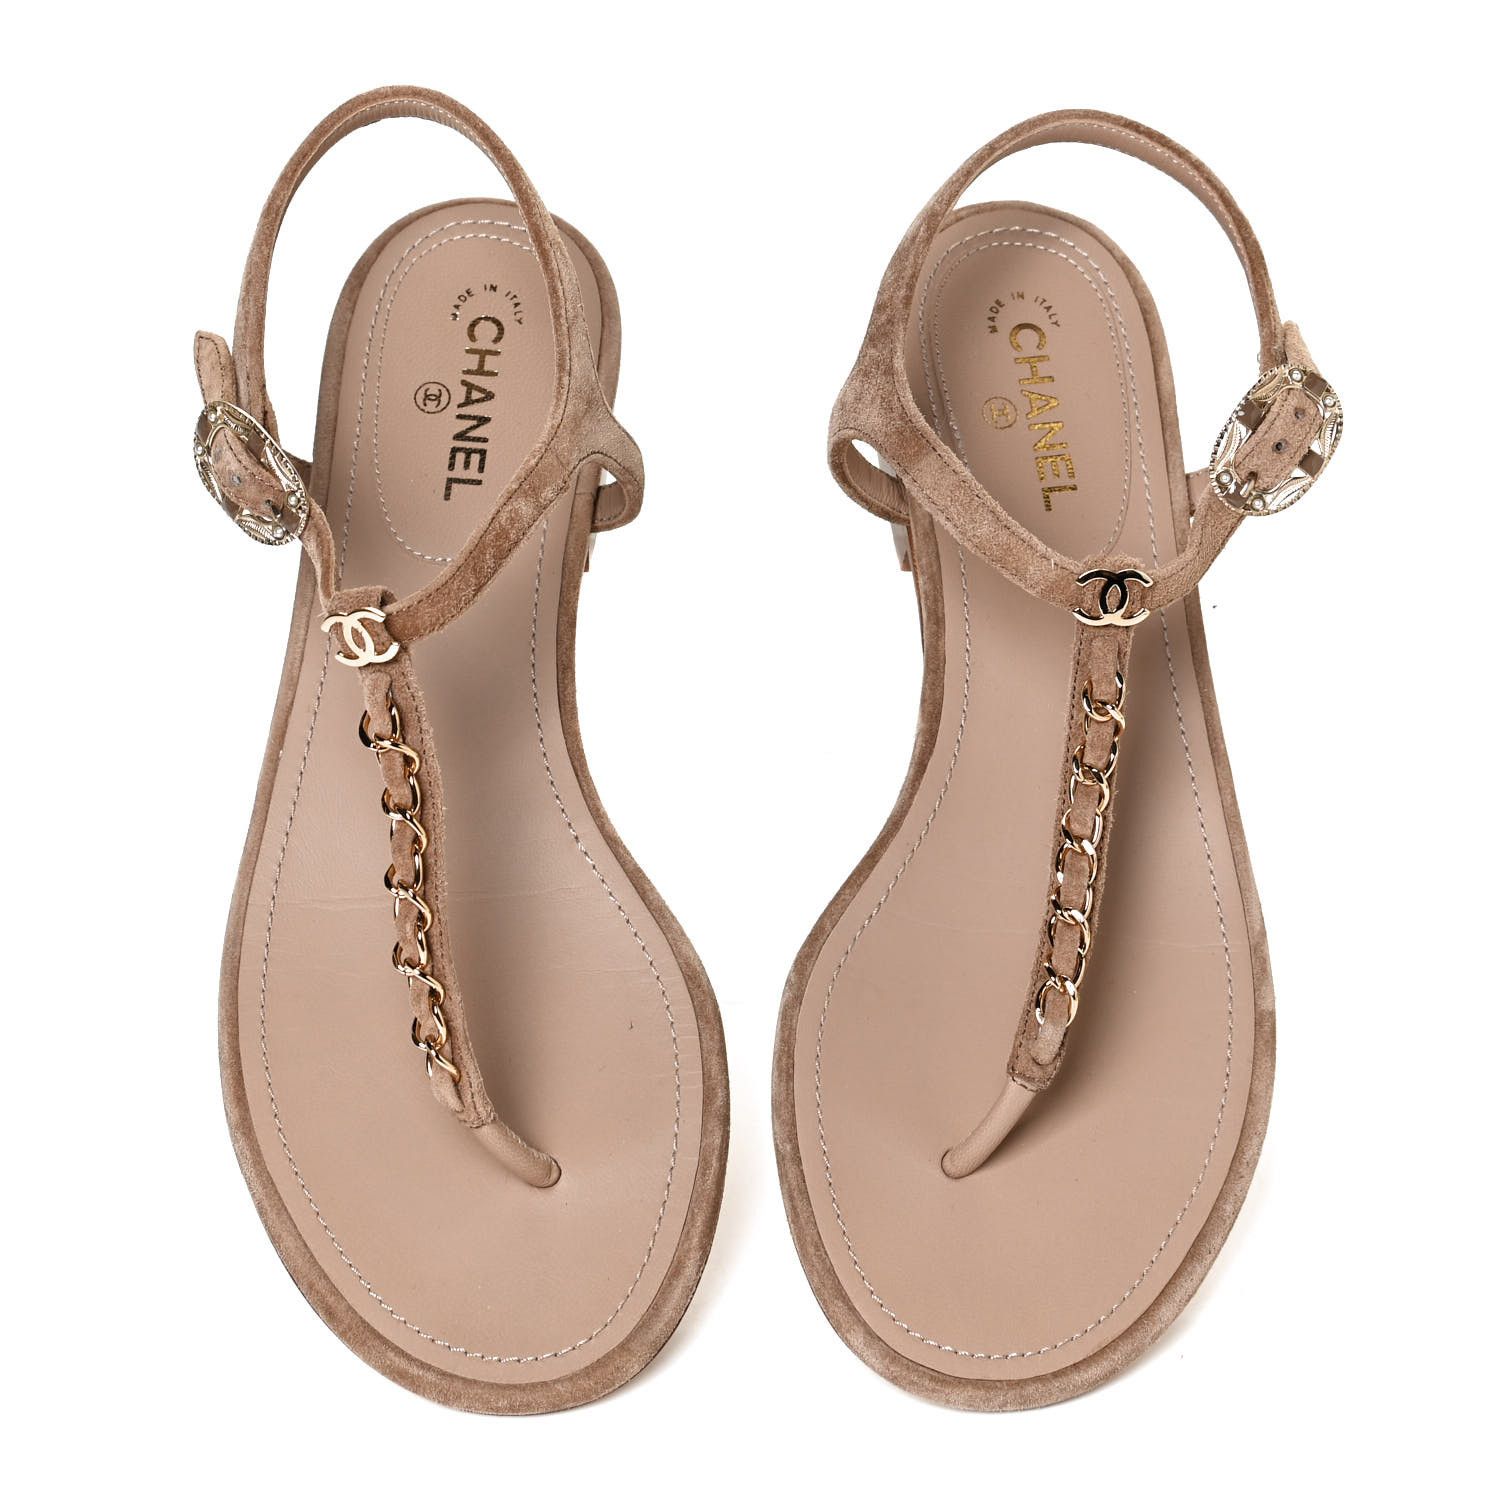 CHANEL Suede Calfskin Chain Thong Sandals 36 Beige | FASHIONPHILE | Fashionphile